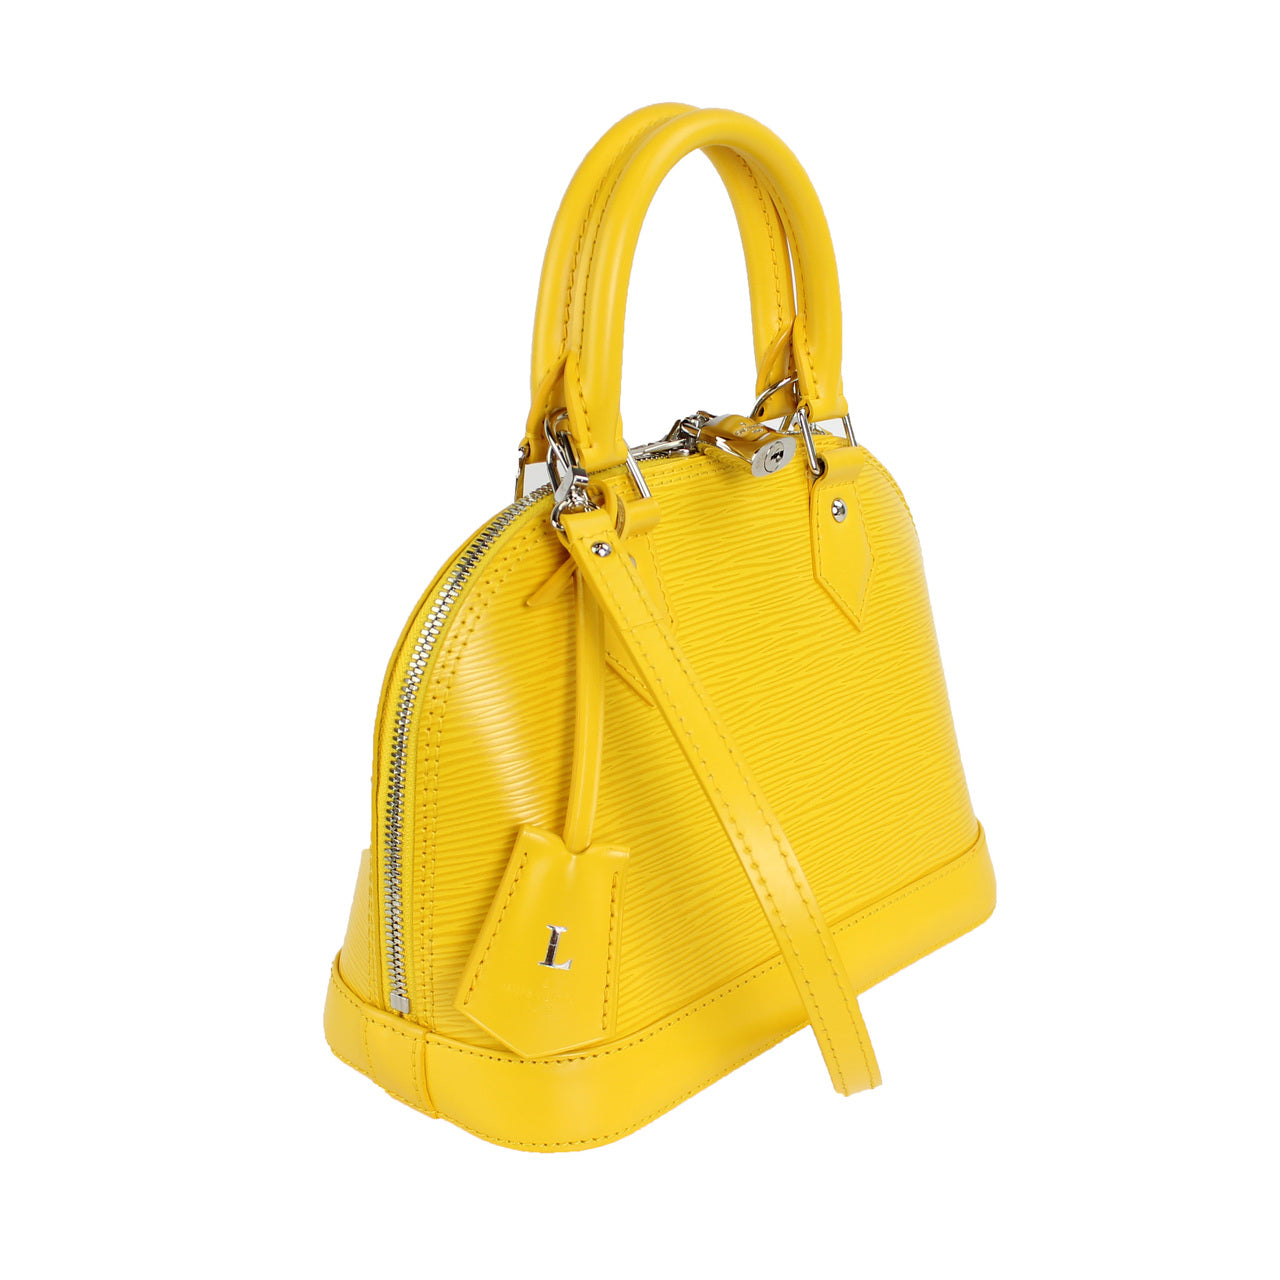 Louis Vuitton Alma Pm in Yellow